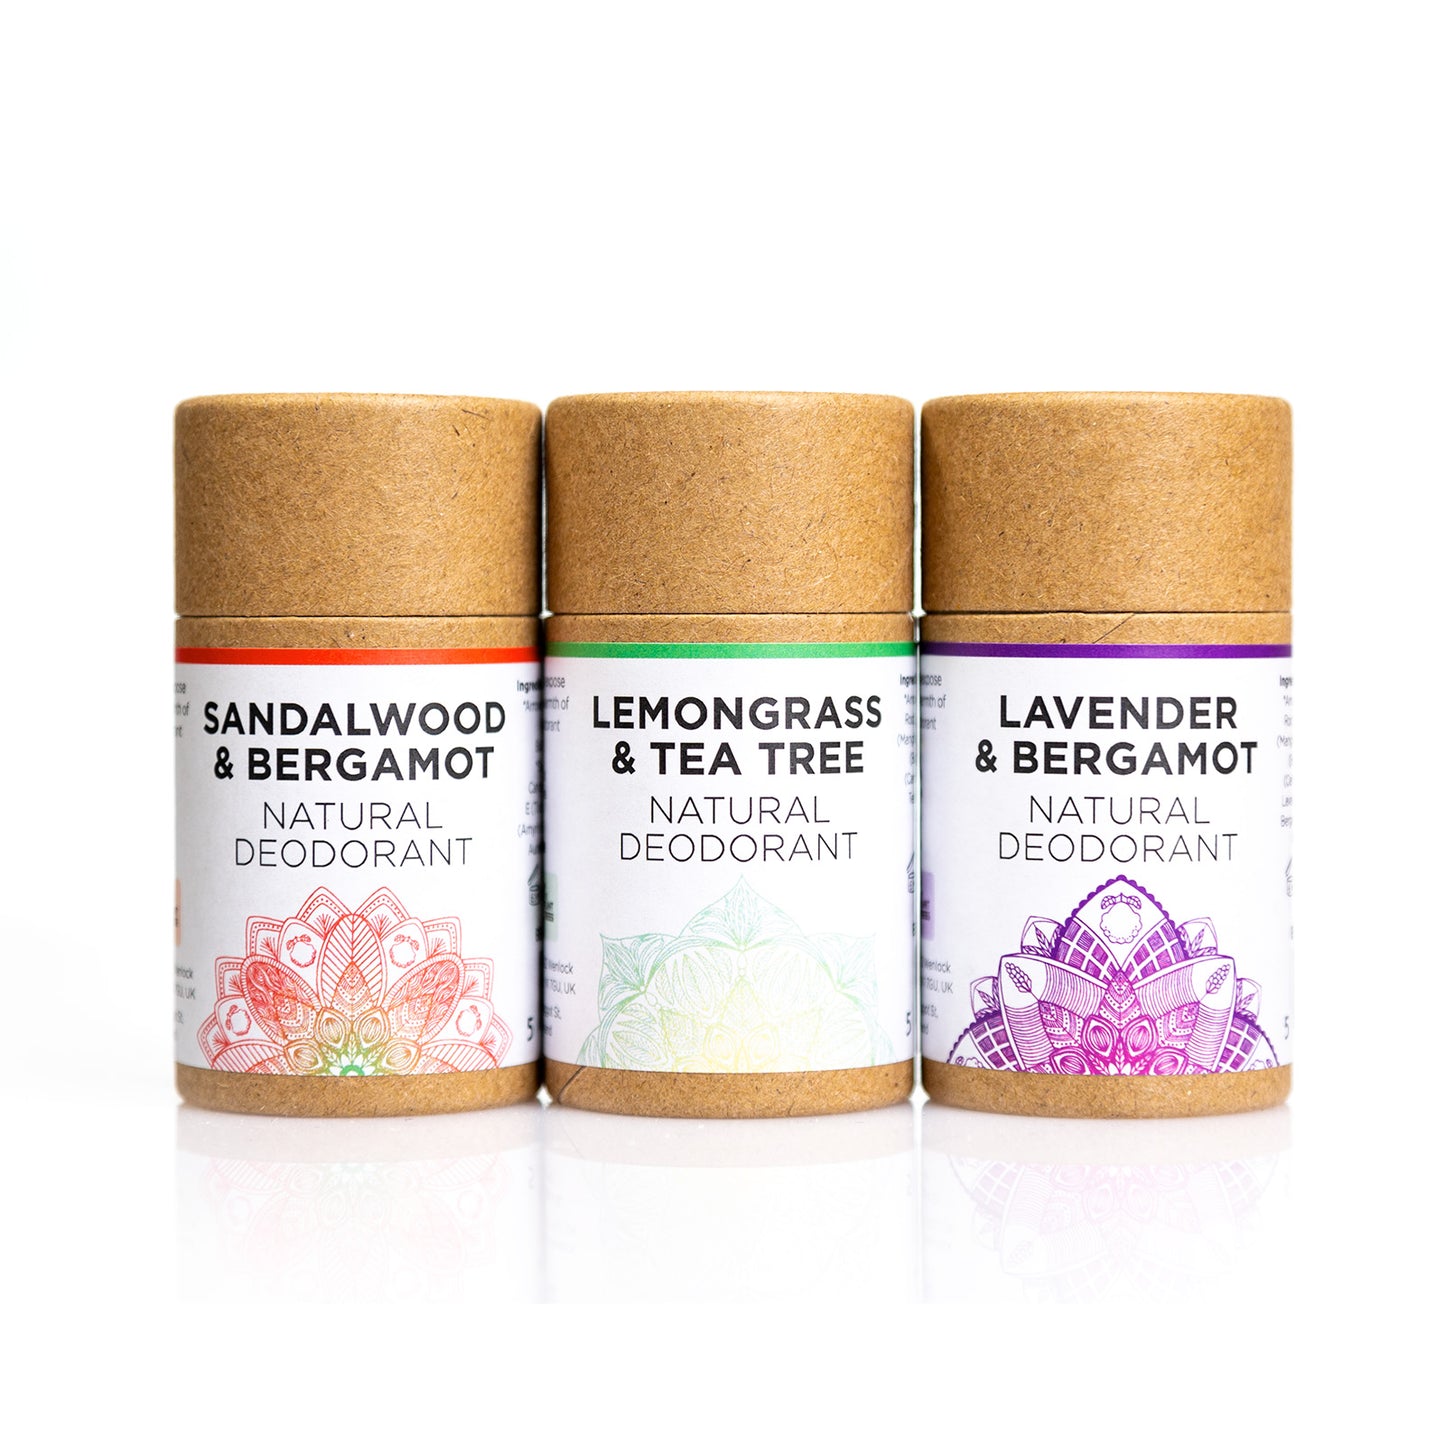 Lemongrass & Tea Tree - Travel Size Deodorant